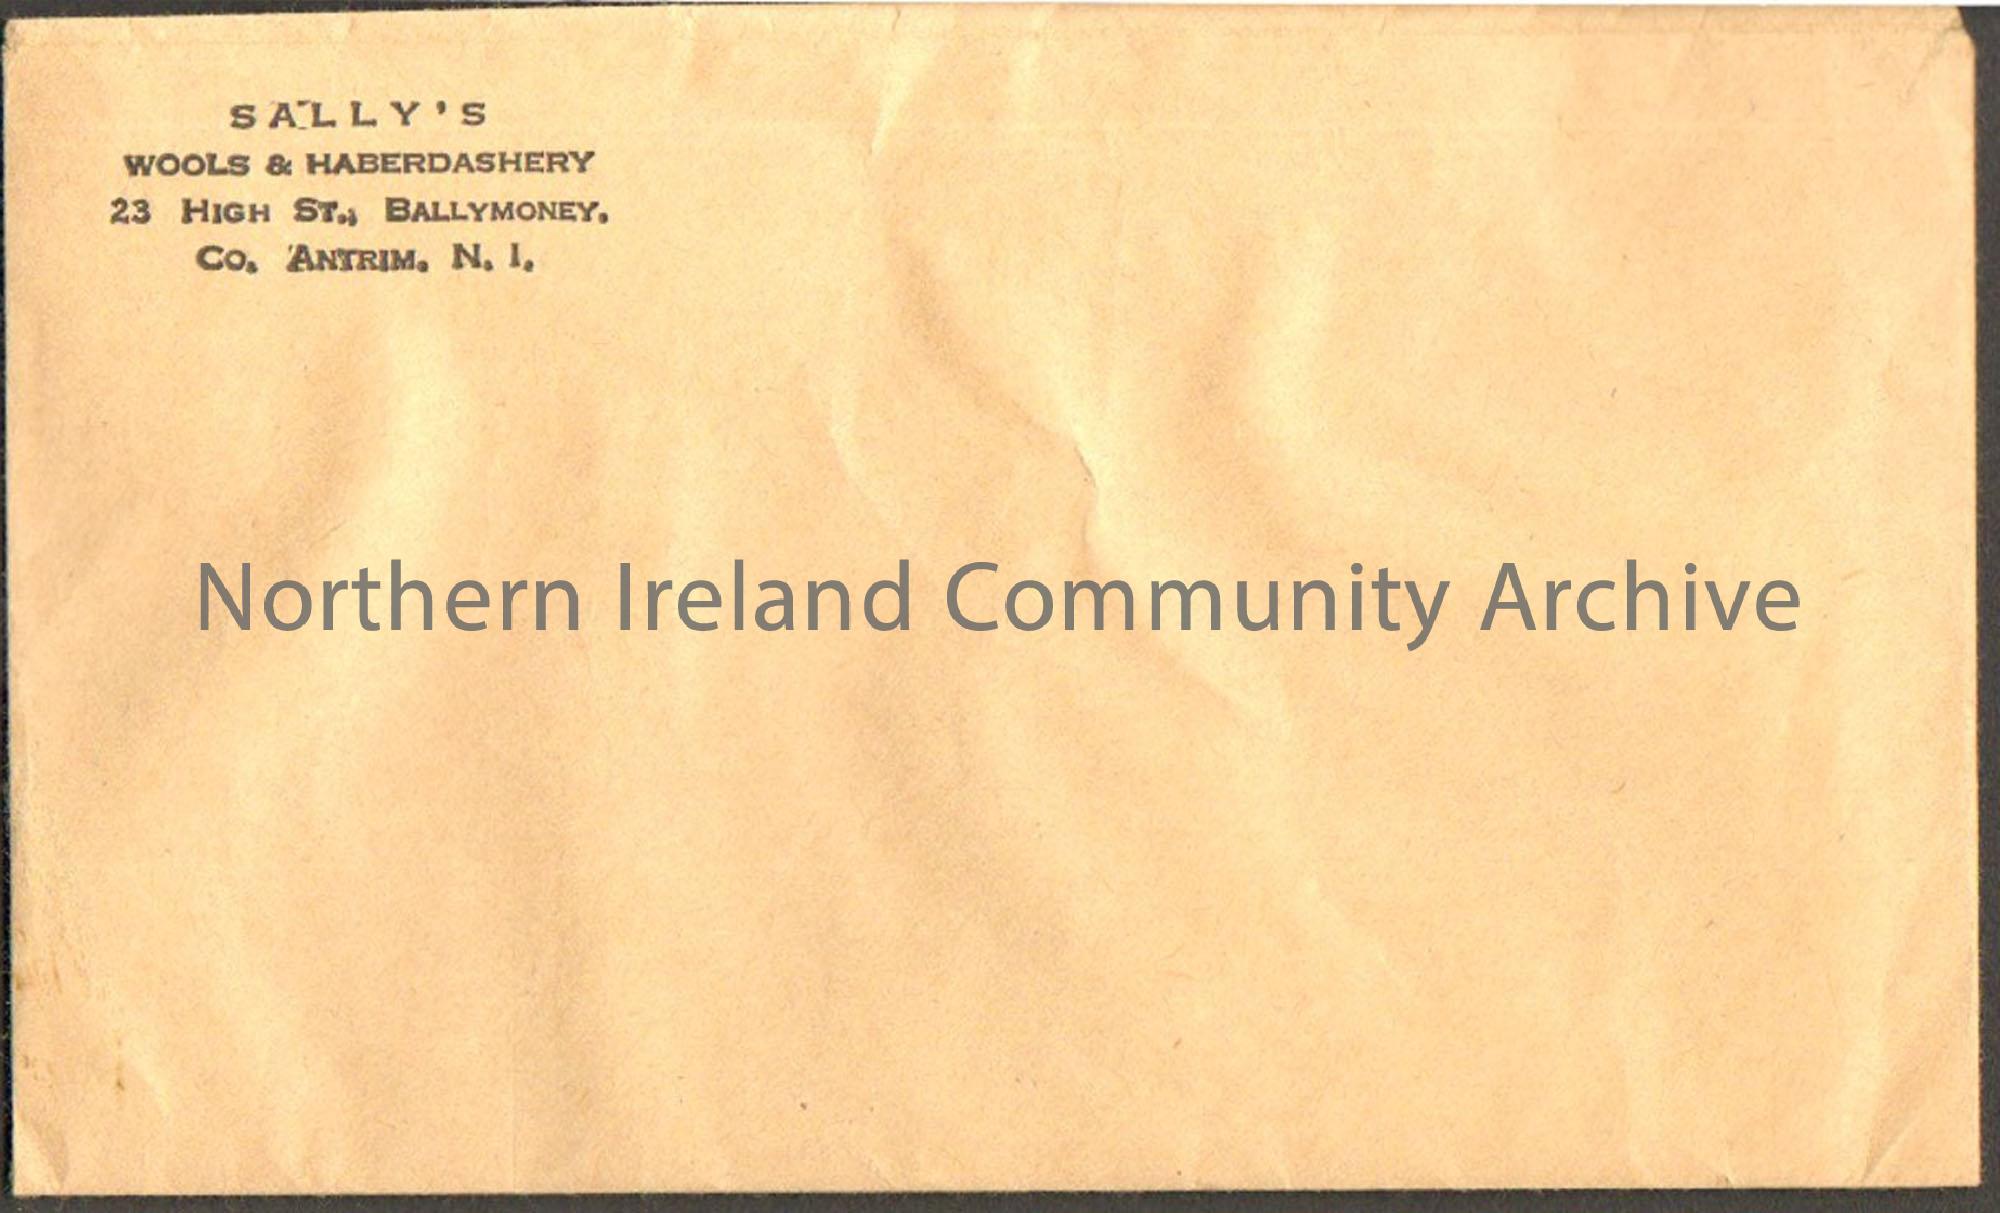 Brown envelope with stamp advertising Sally’s Wool and Haberdashery printed in black in top left corner